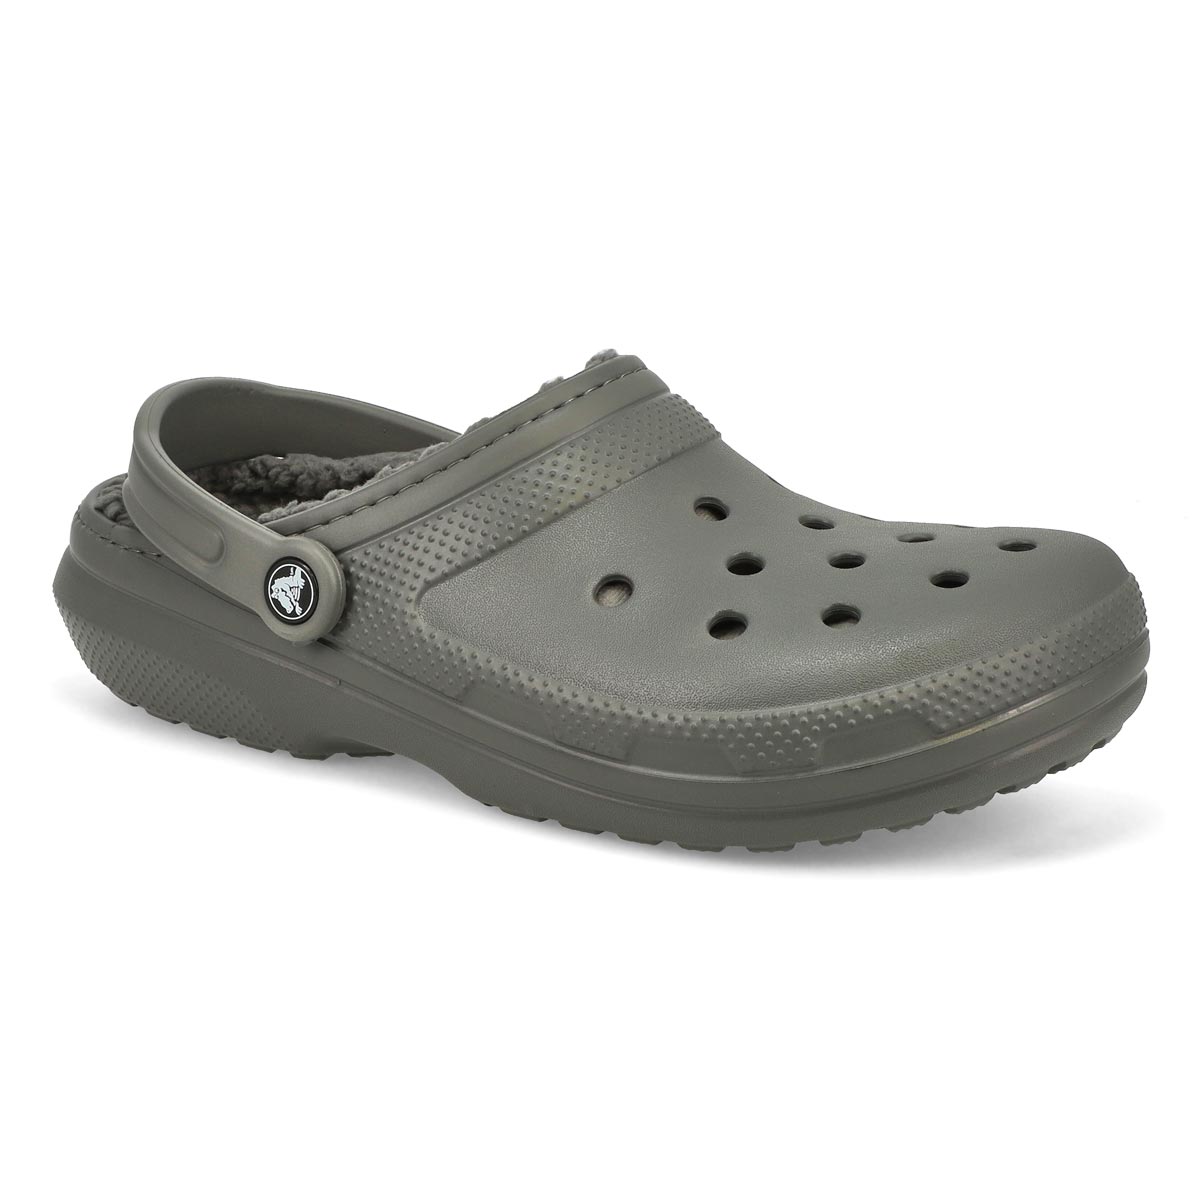 Crocs Men's Classic Lined Comfort Clog - Slat | SoftMoc.com